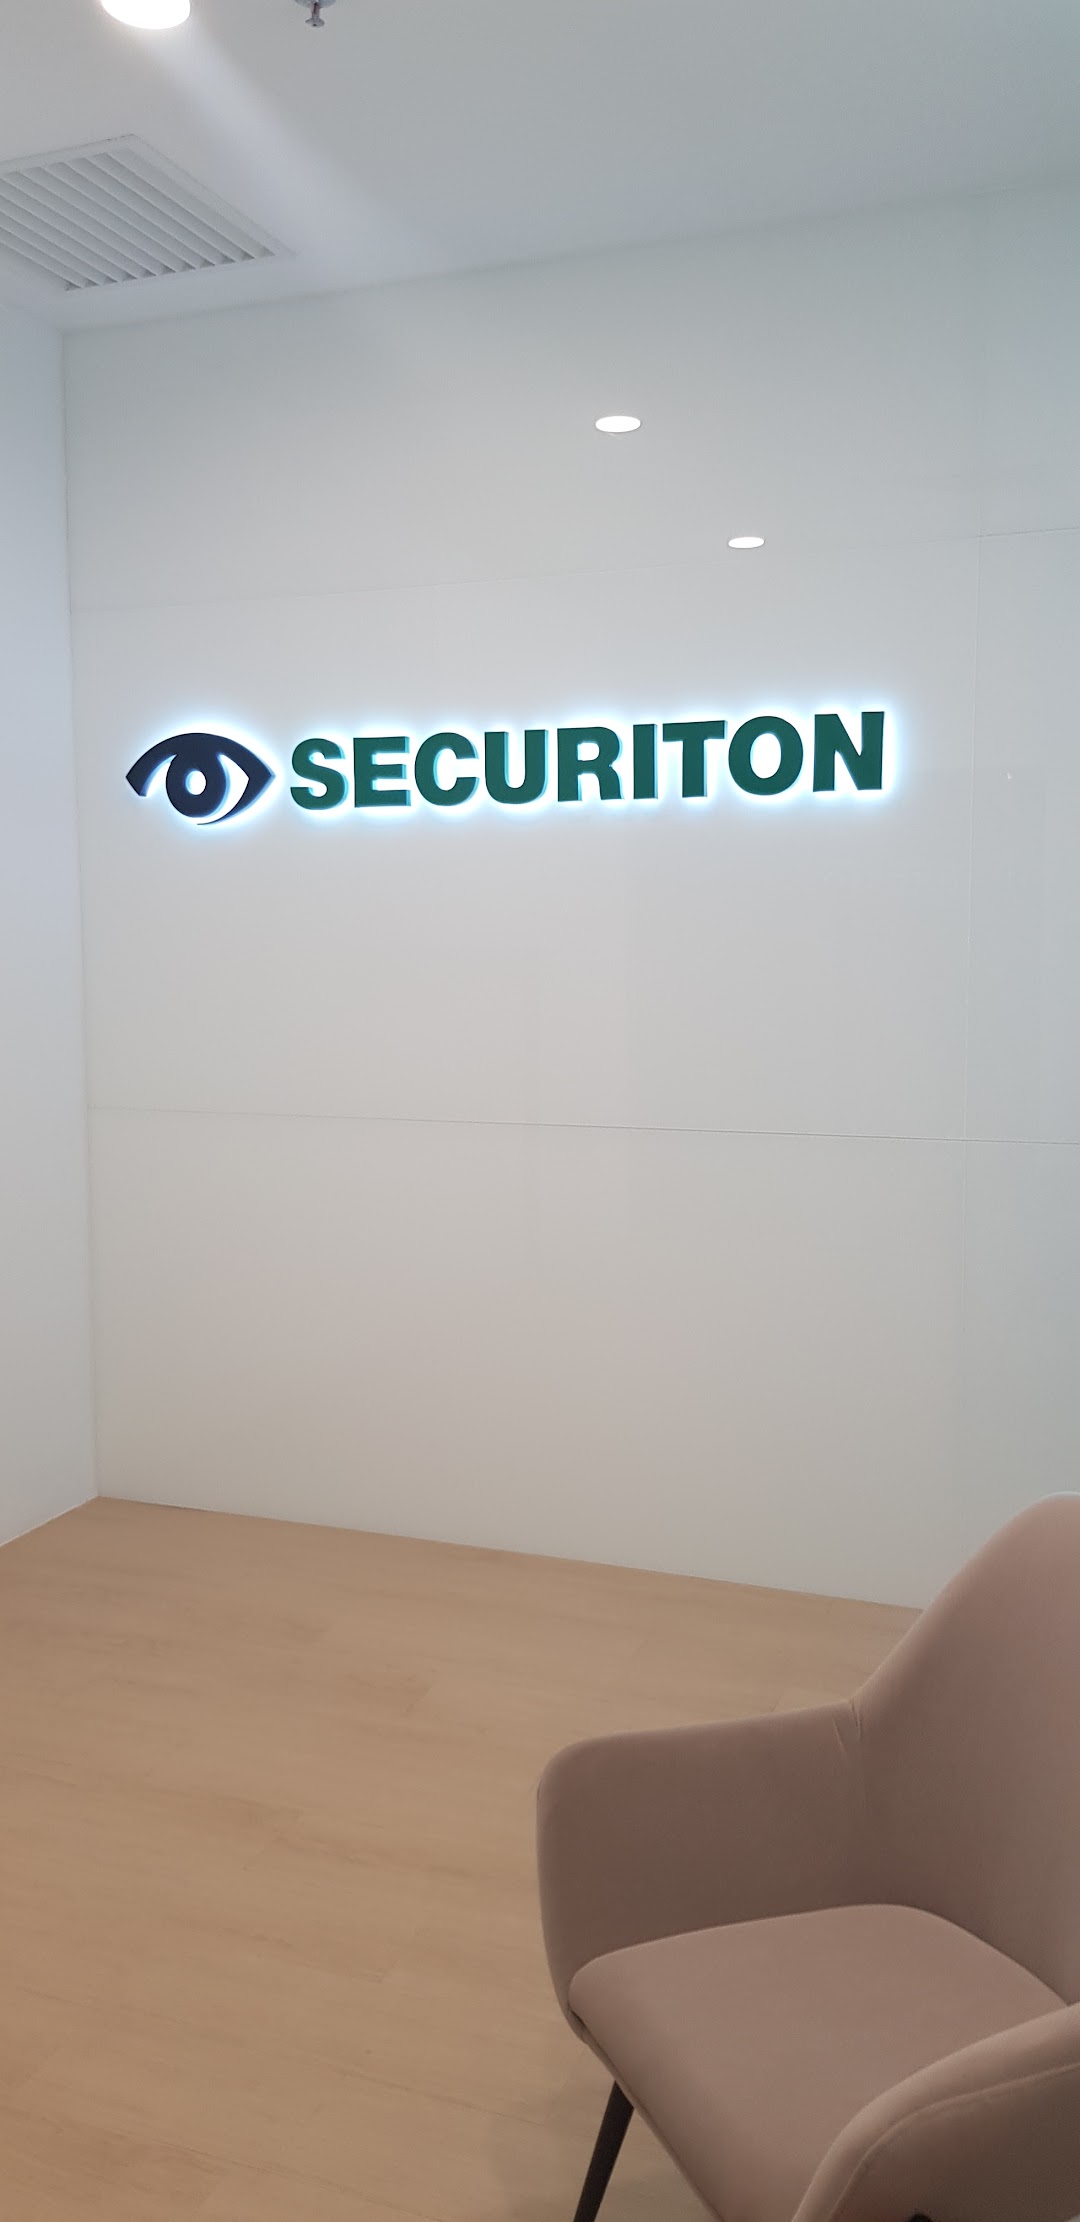 Securiton (M) Sdn Bhd